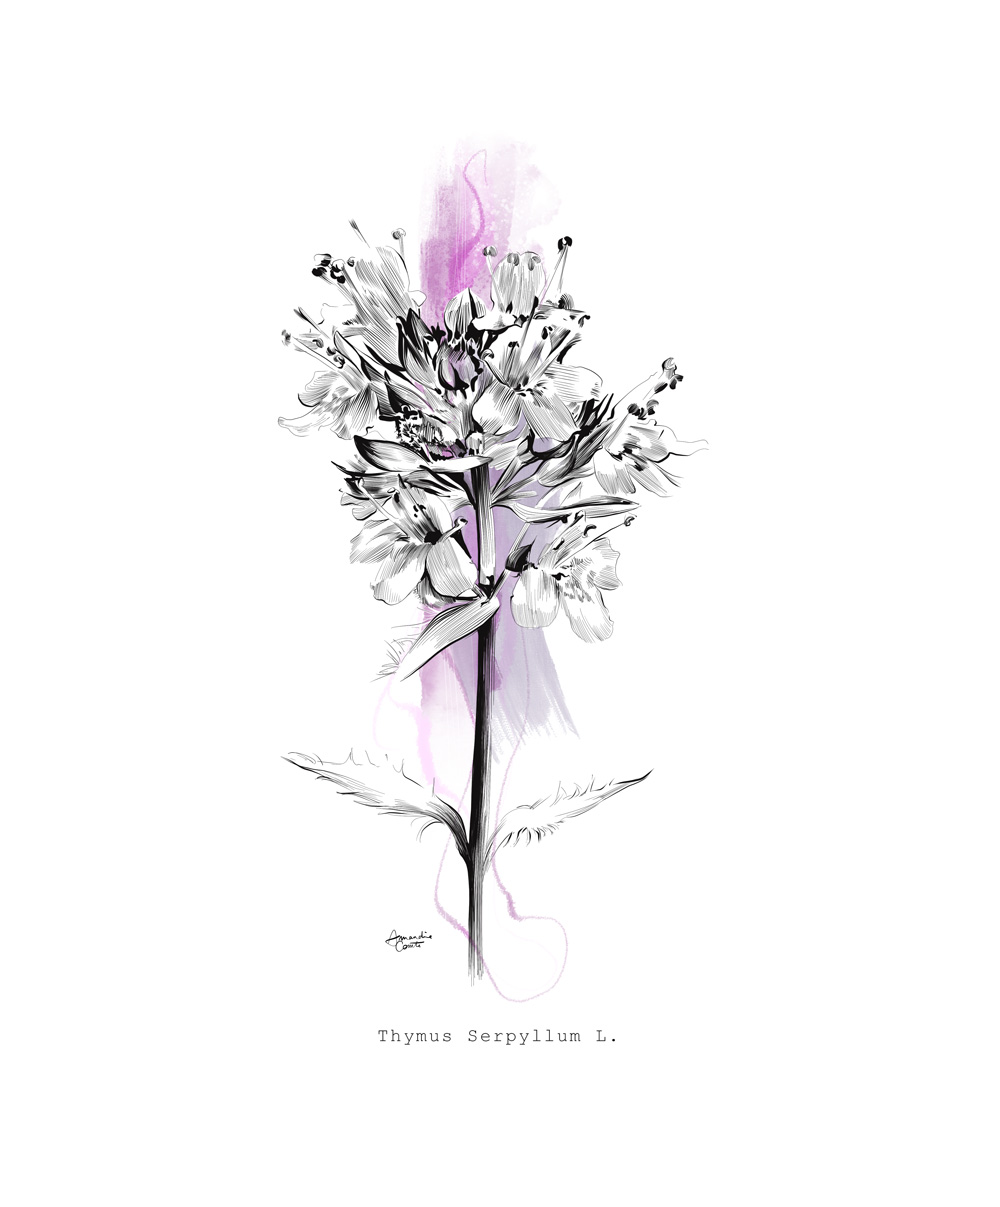 Thymus-Serpyllum-L